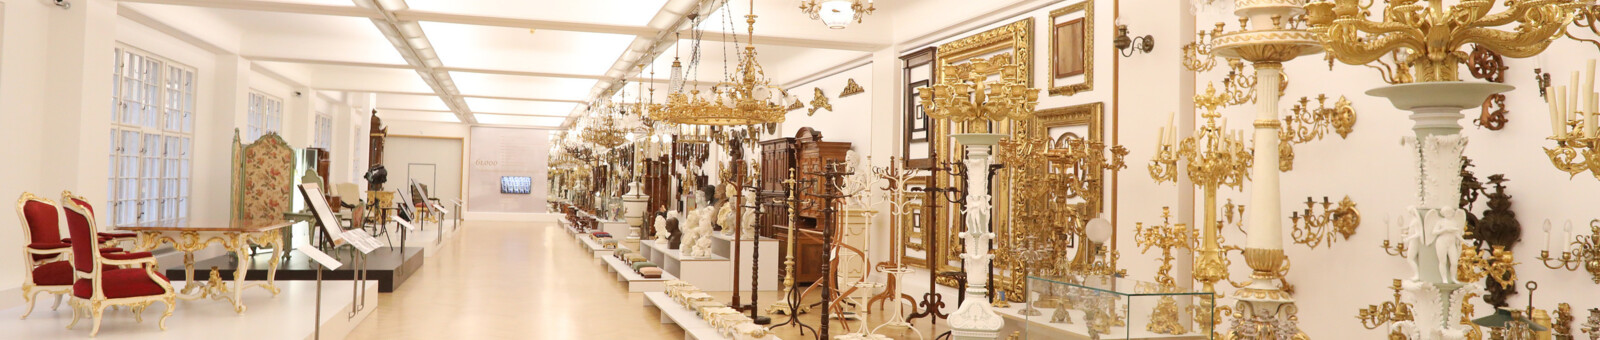     Vienna Furniture Museum - The Heritage 